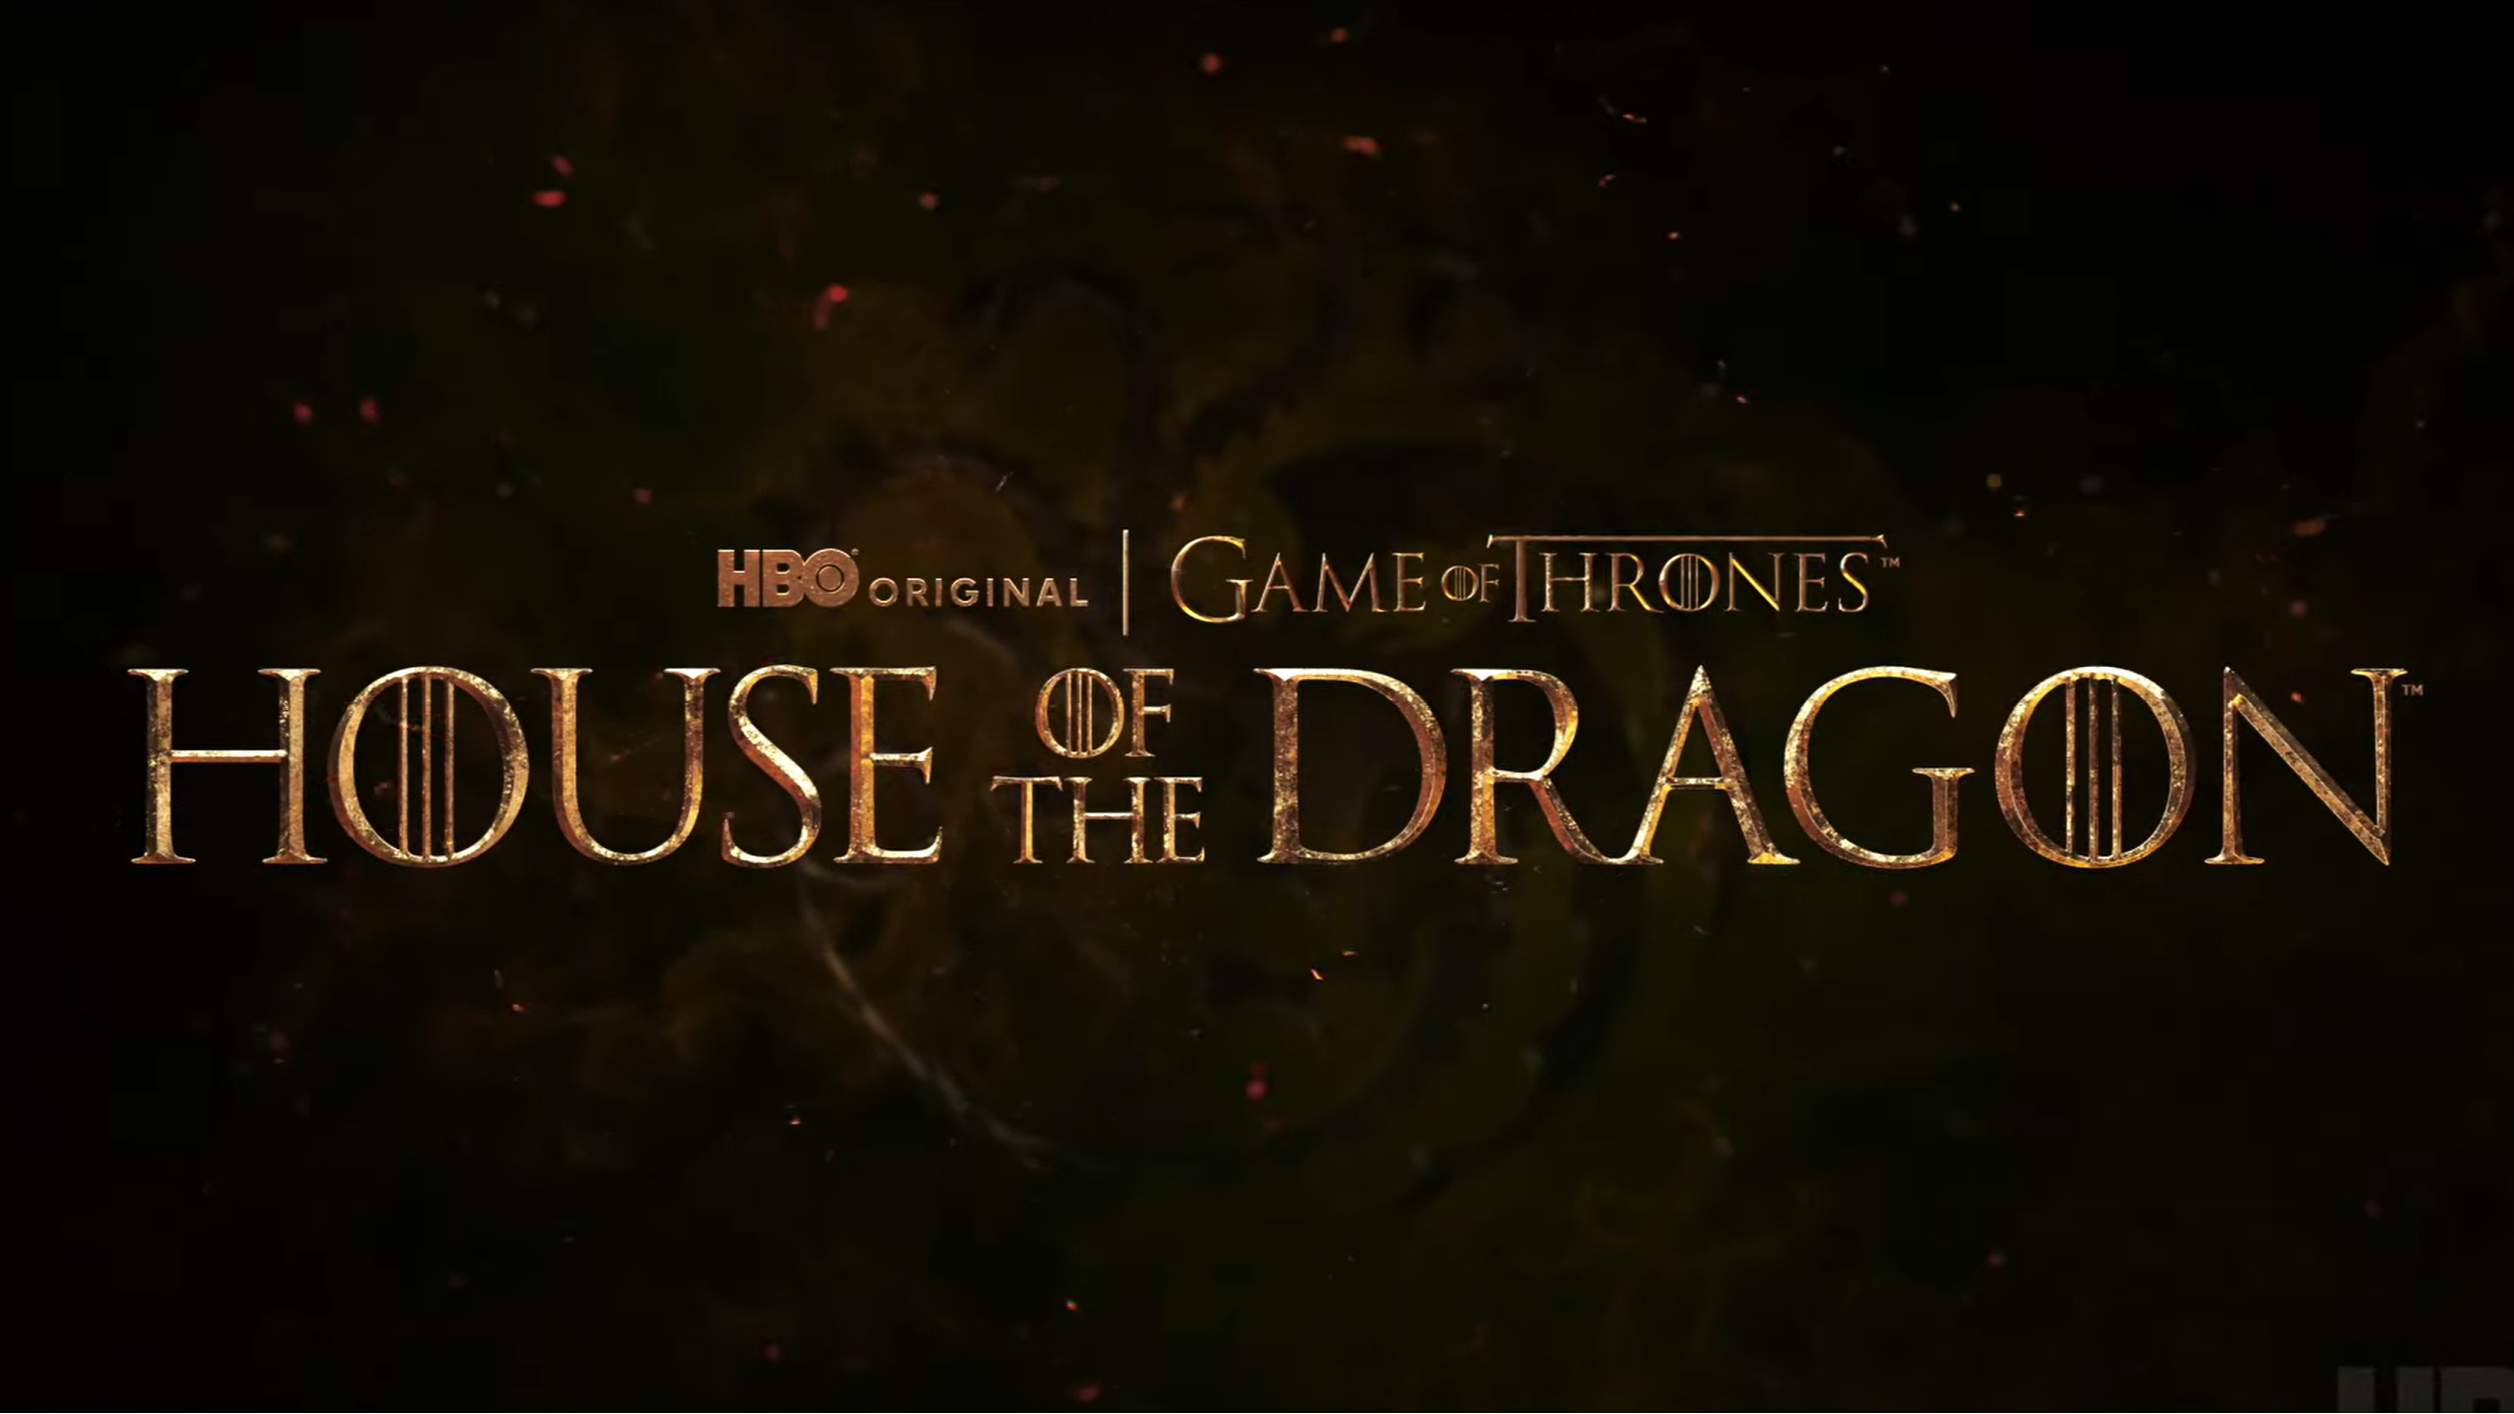 House of the Dragon Season 2, Full Trailer